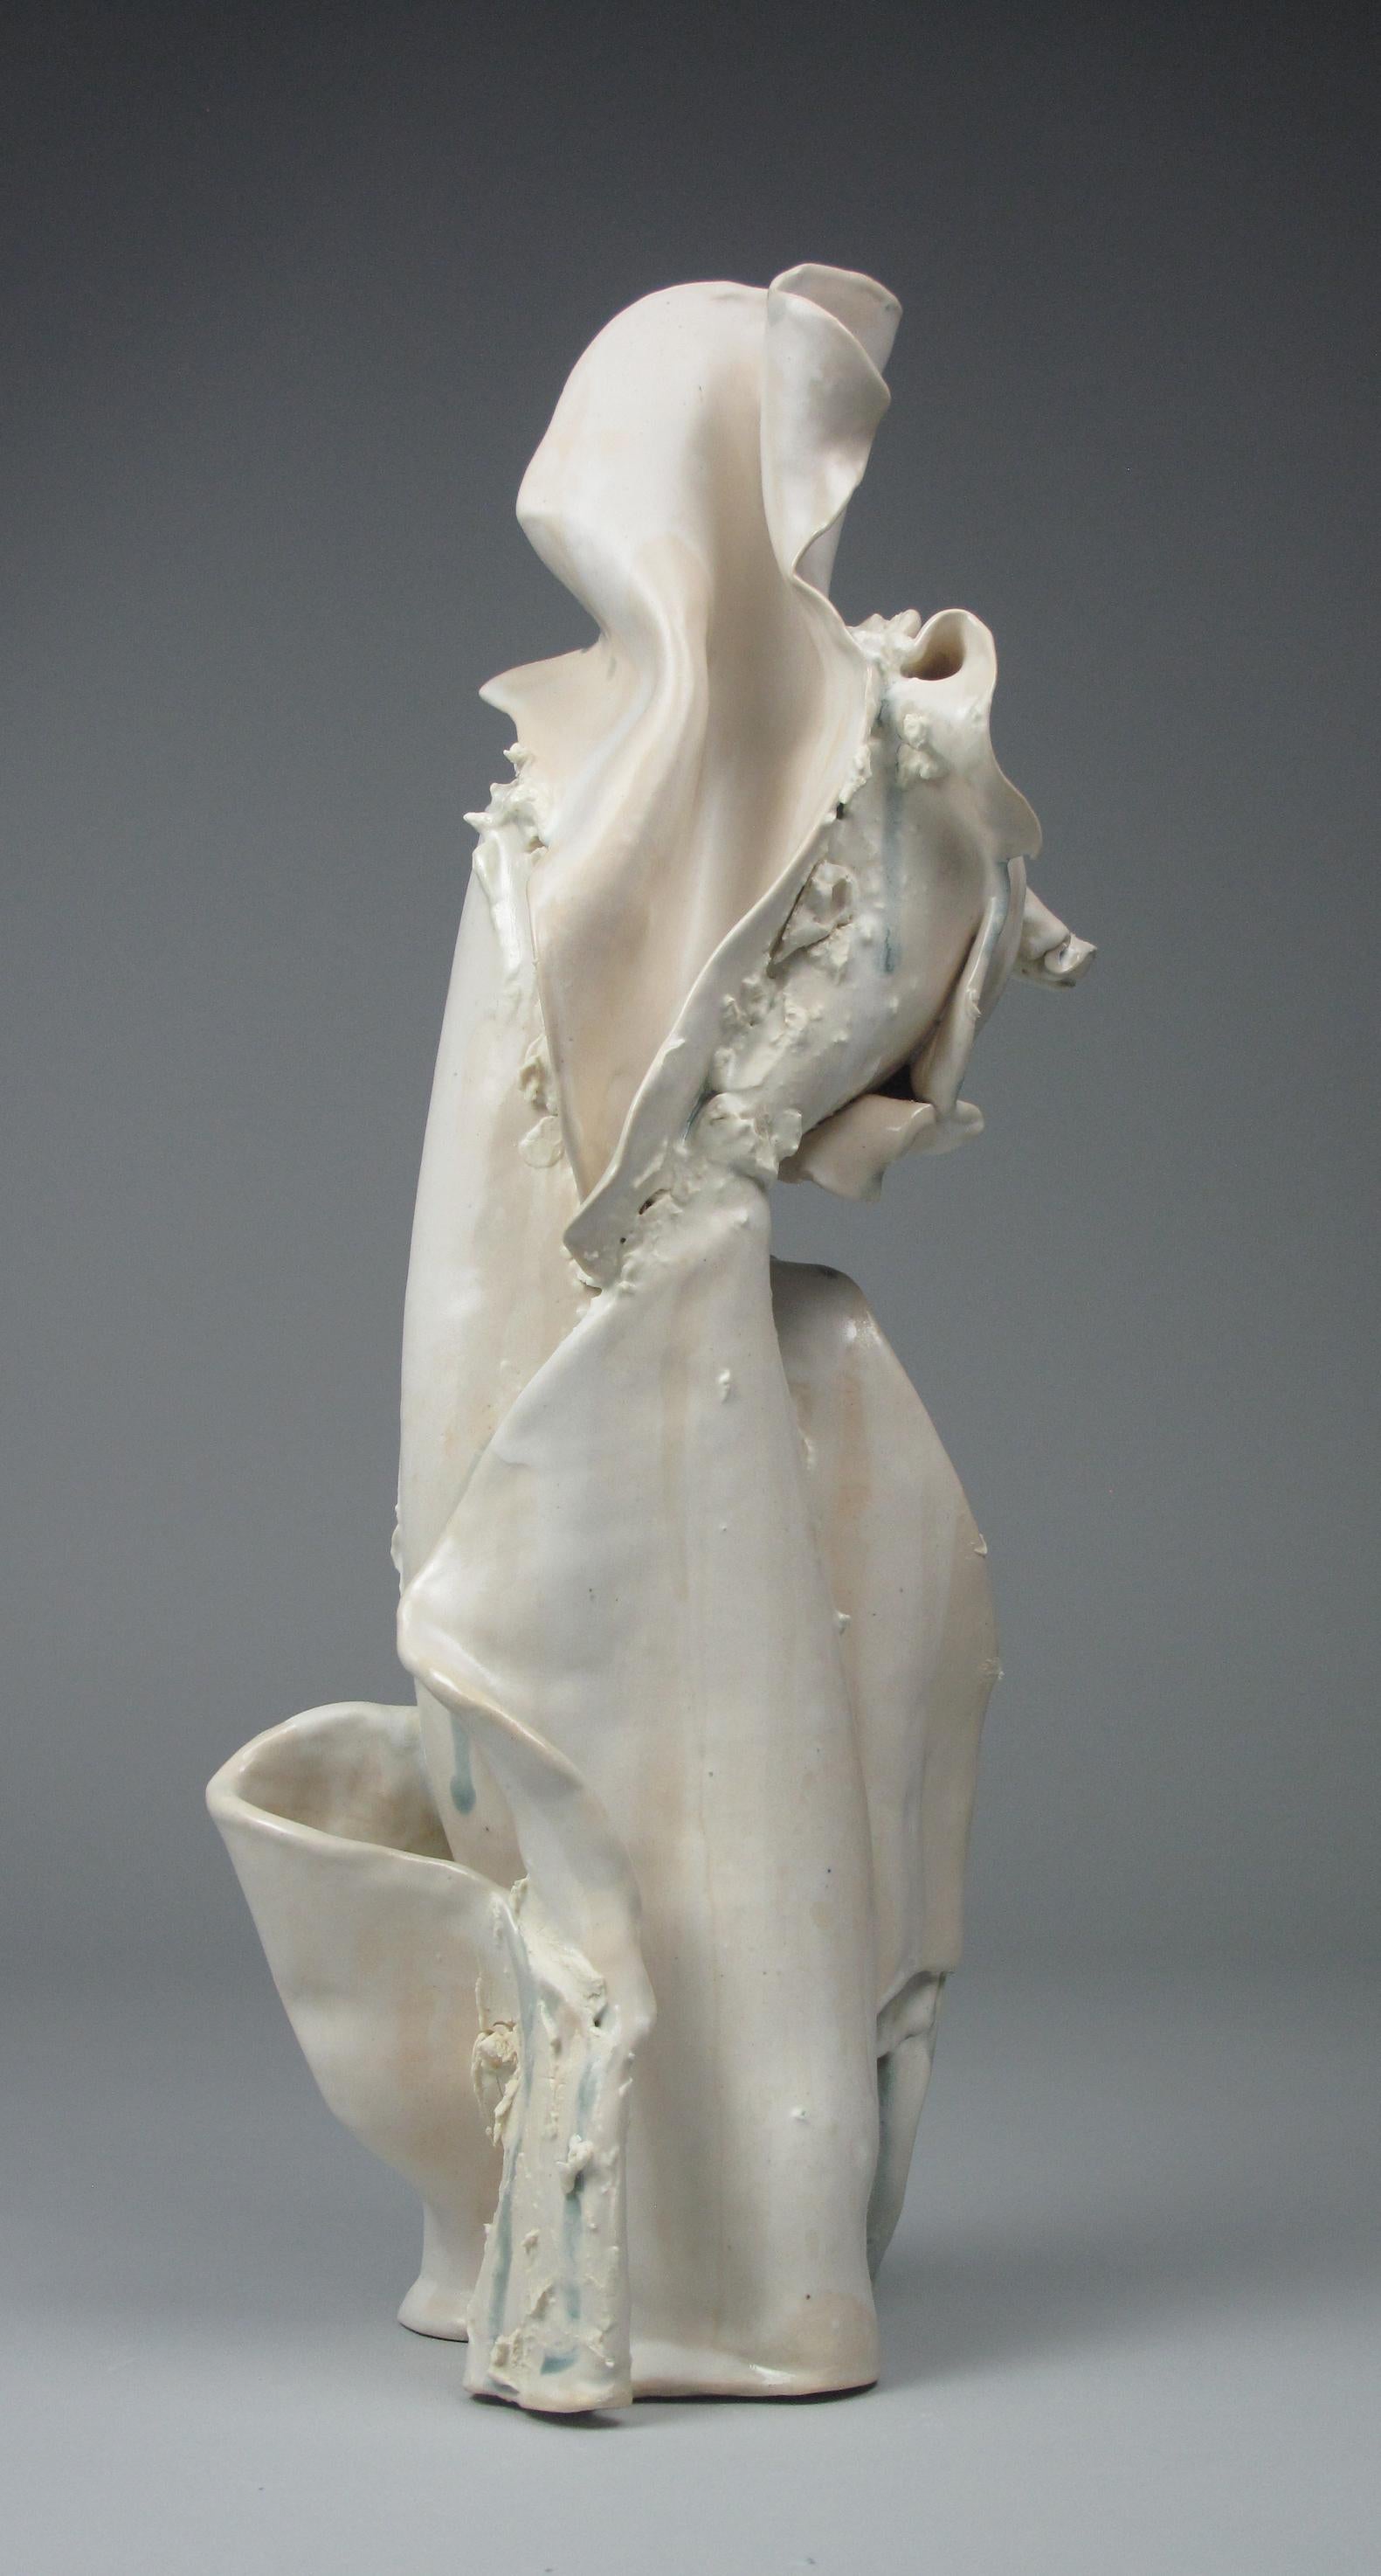 abstract ceramic sculpture ideas